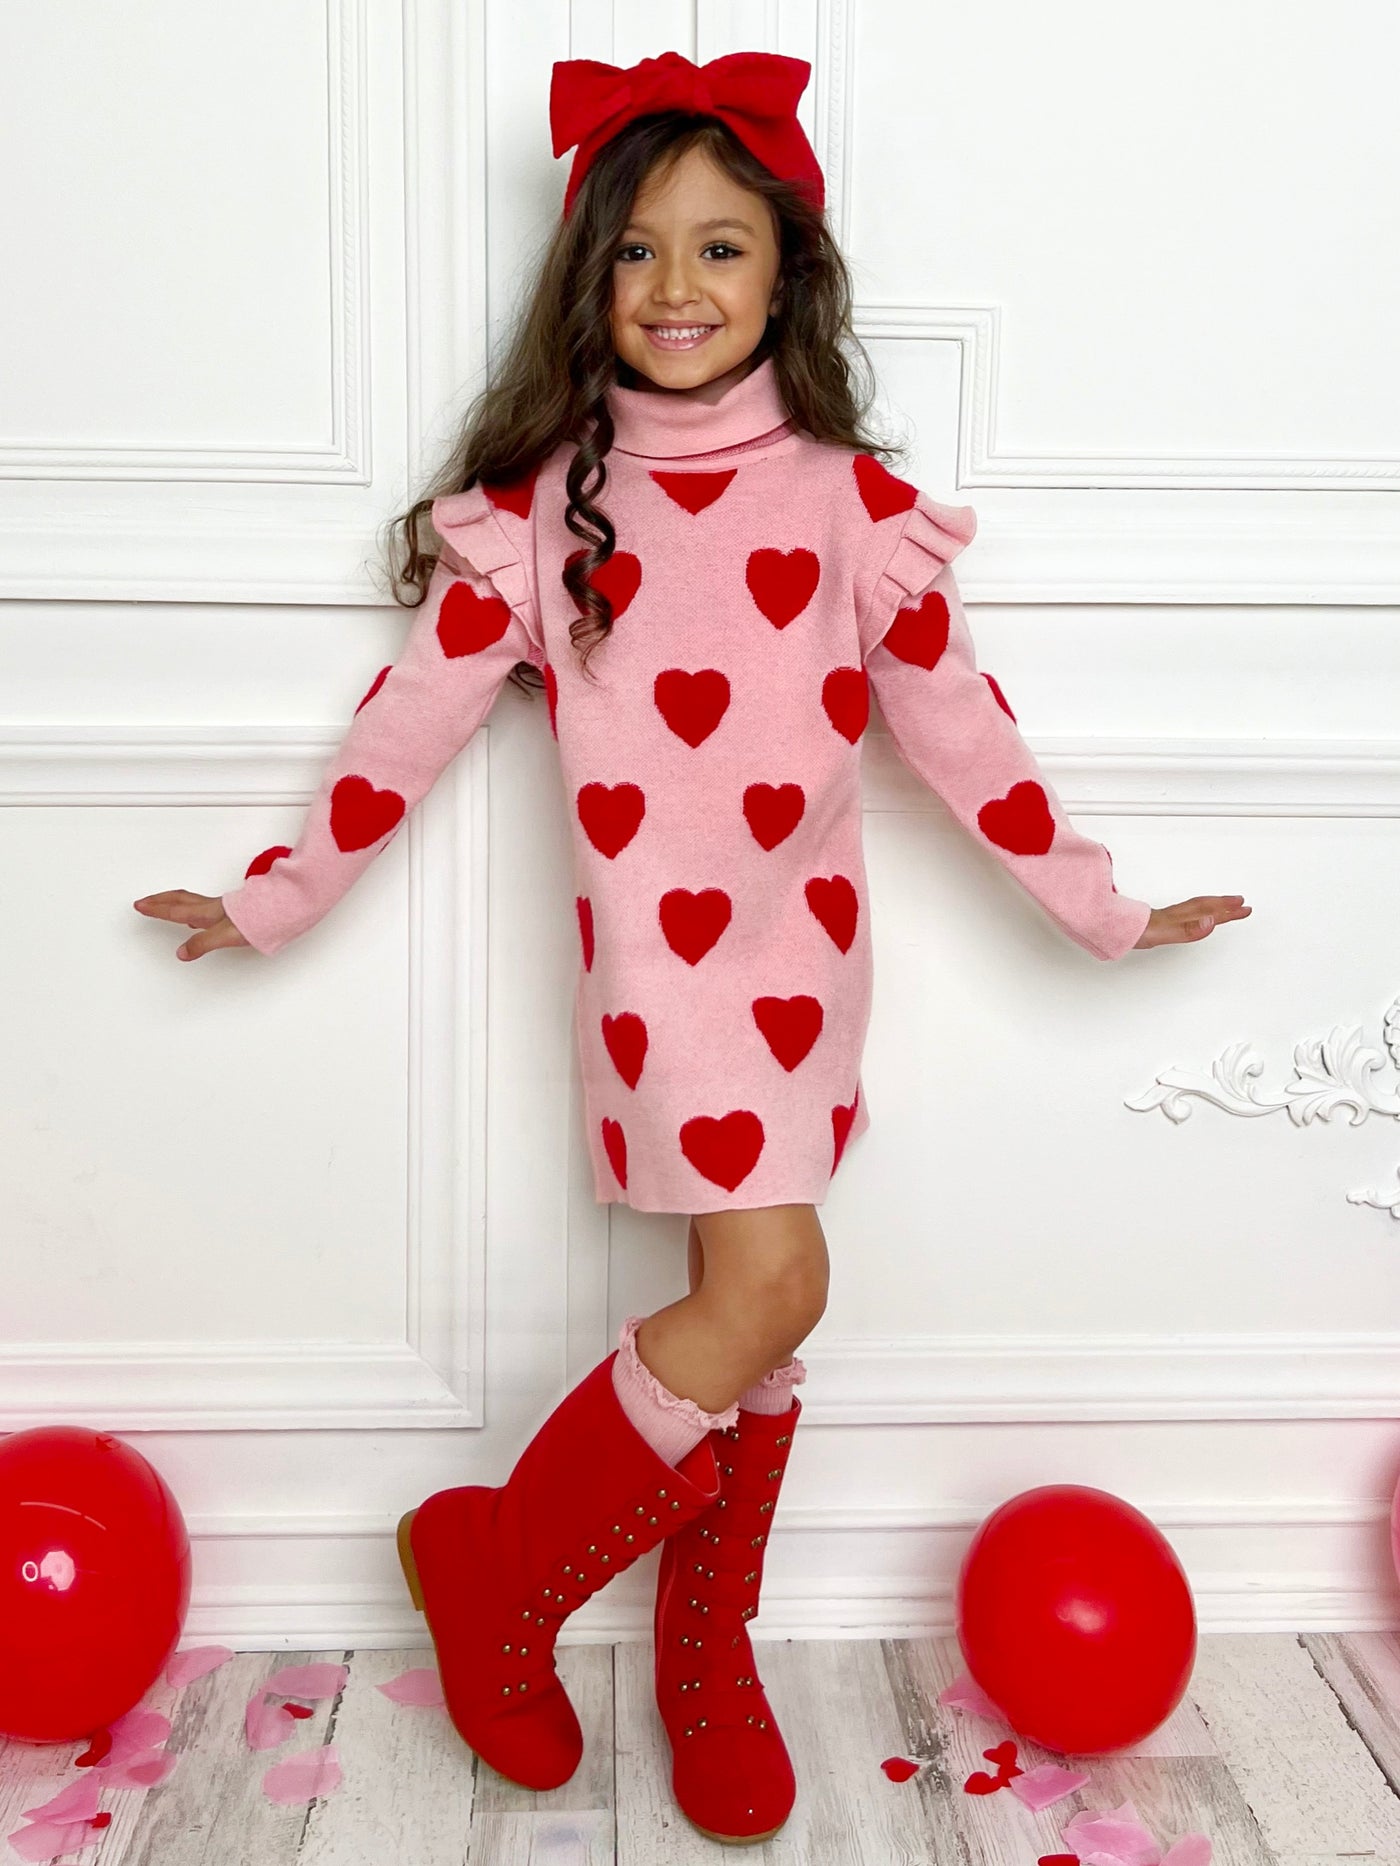 Mia Belle Girls Heart Sweater Dress | Girls Valentine's Dresses